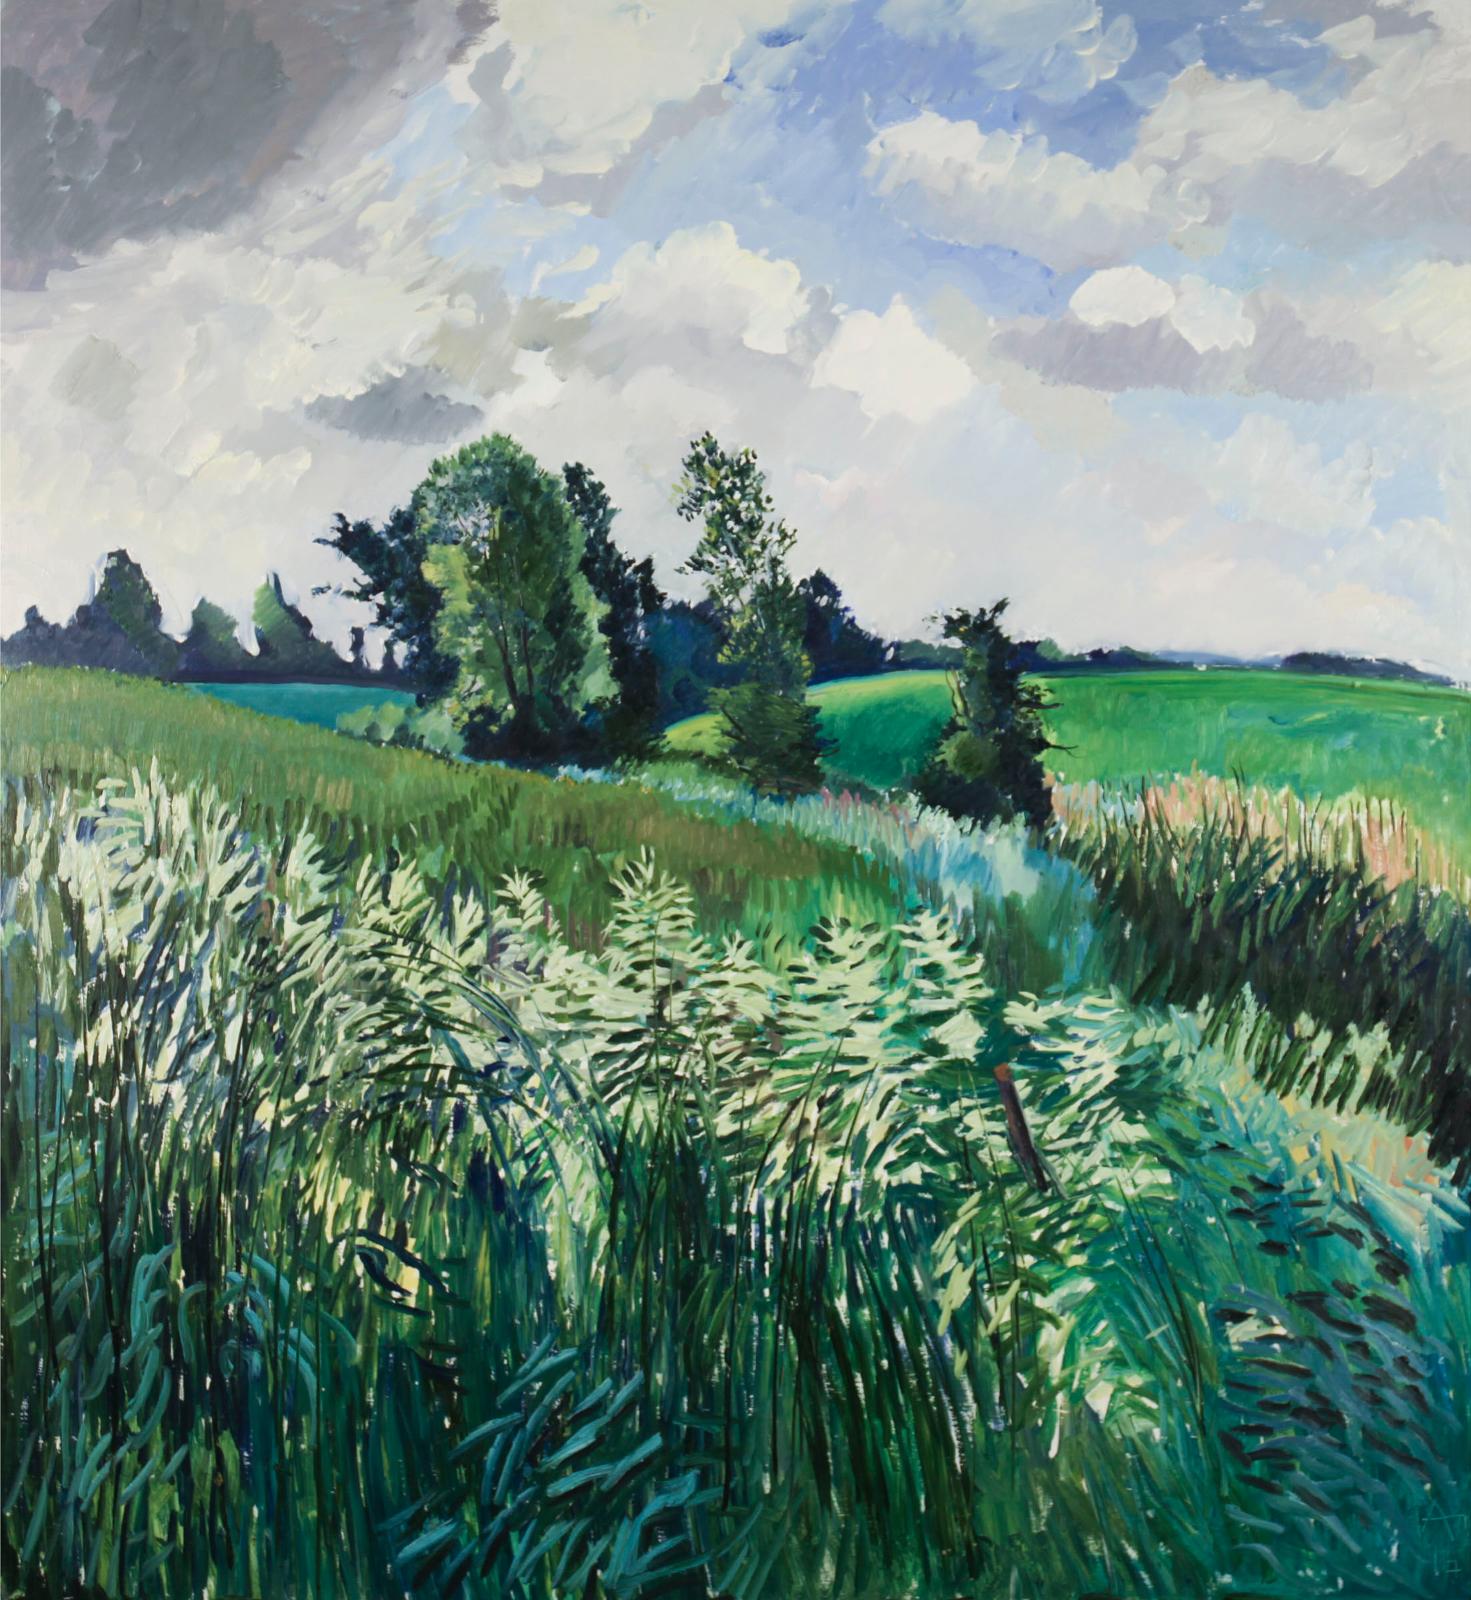 John David Anderson (1940) - Untitled (Landscape), 1996